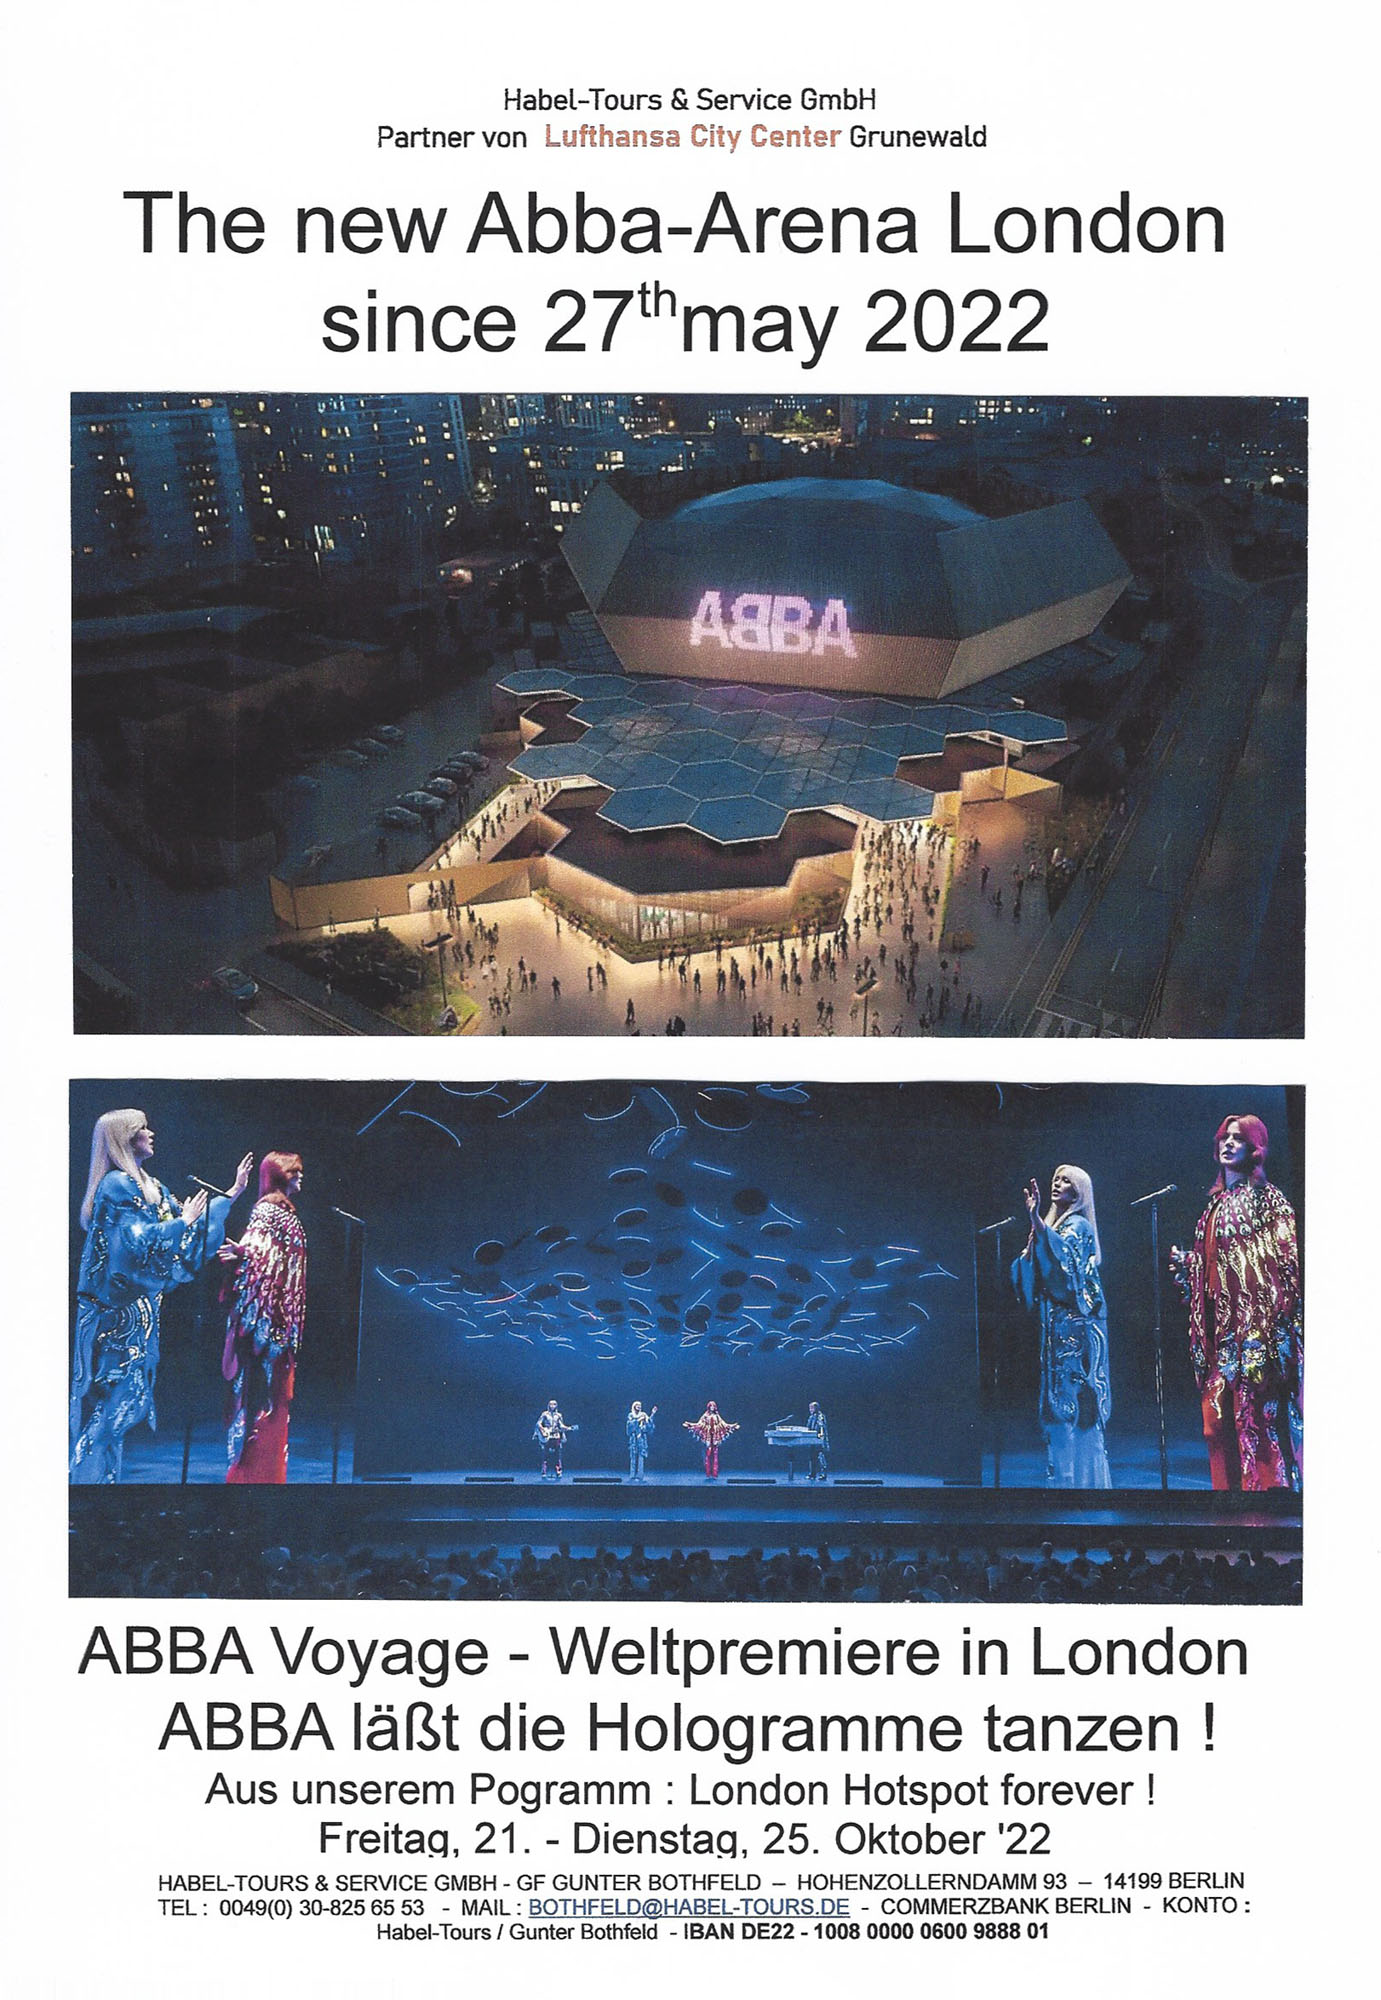 Teaserplakat für ABBA-Konzert